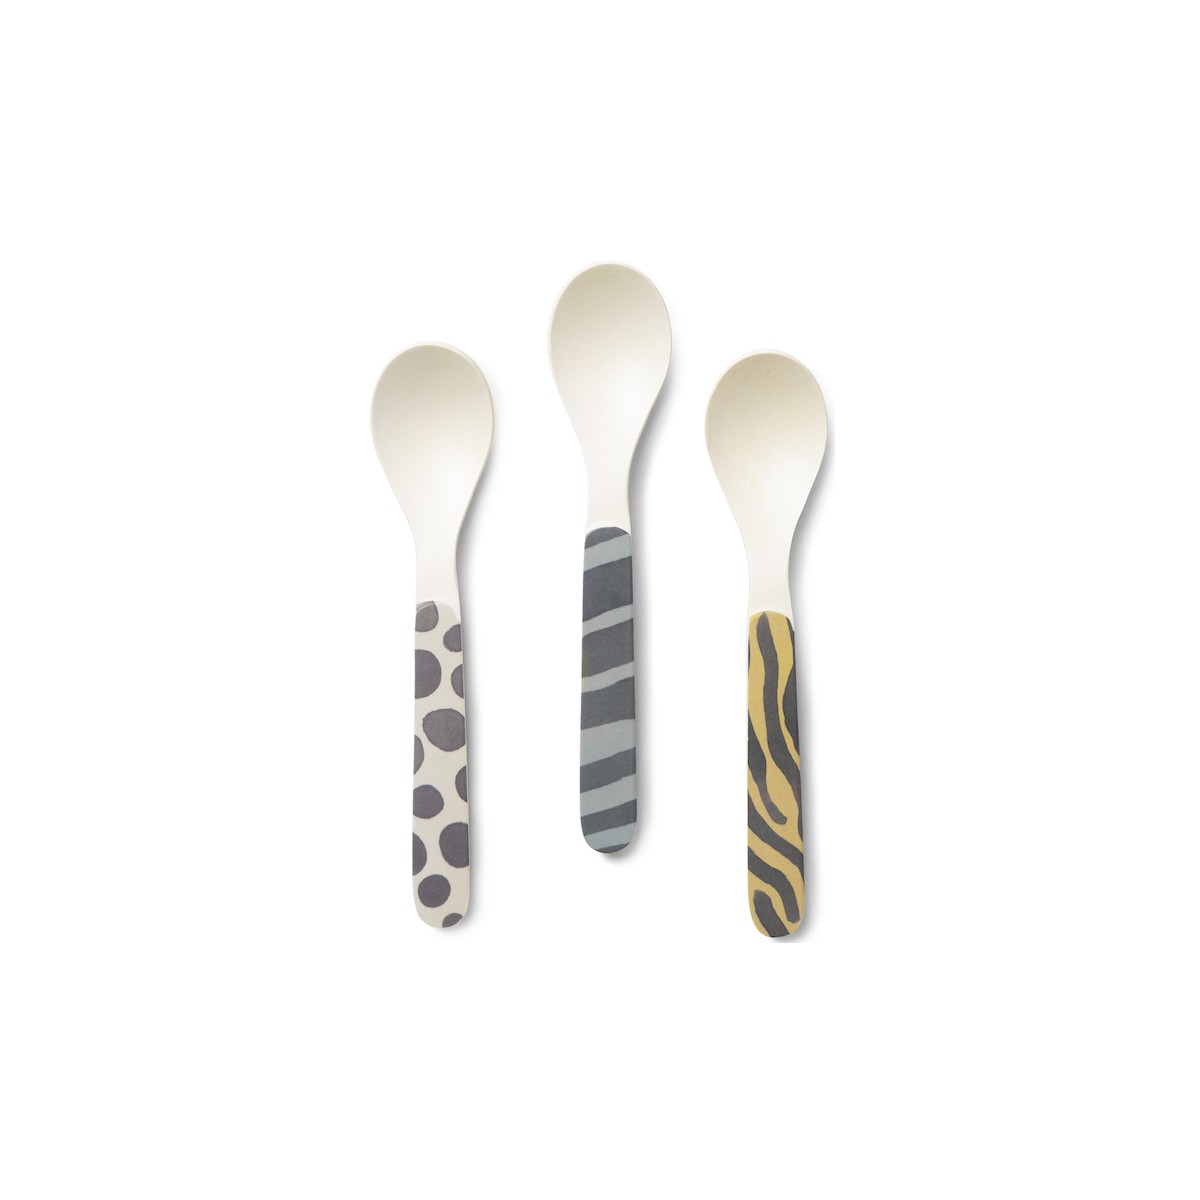 Safari Bamboo - 3 spoons set